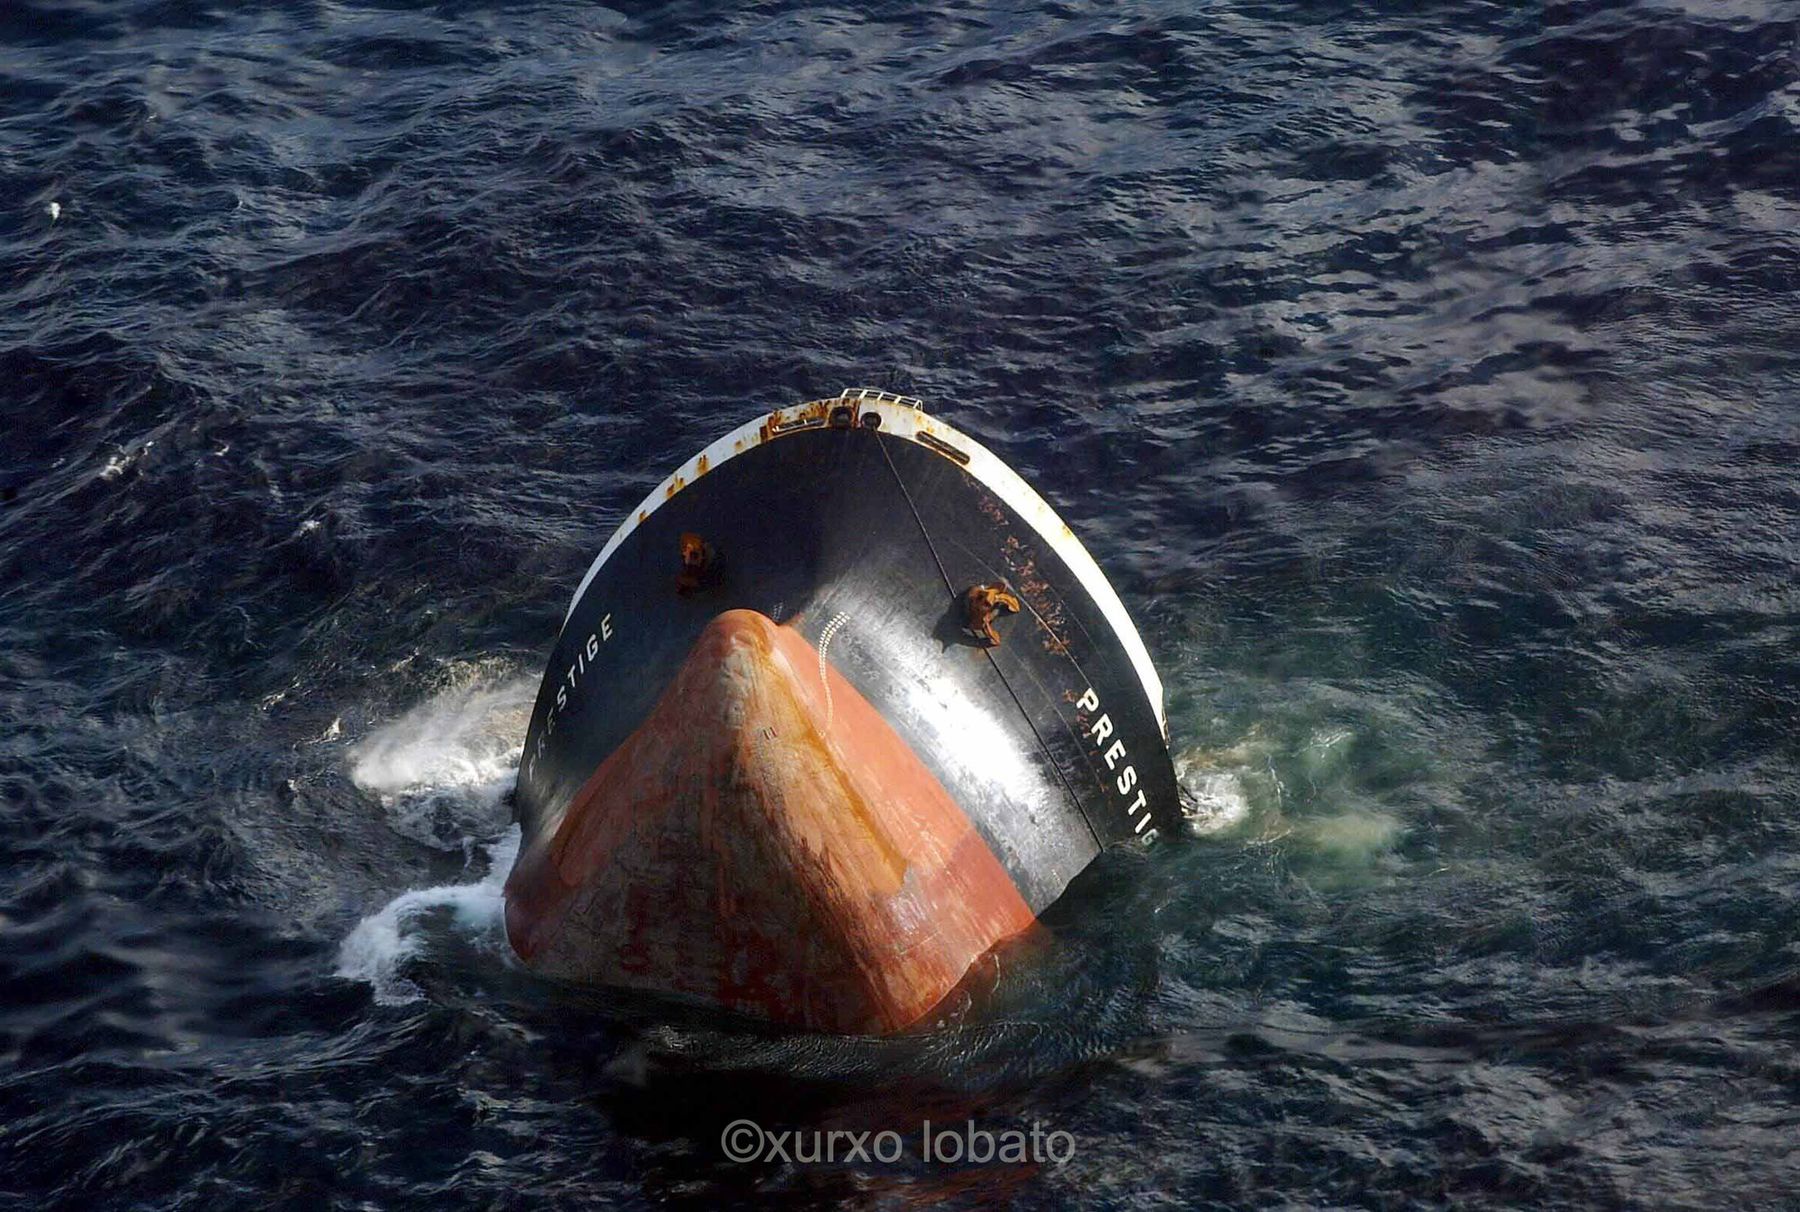 The oil tanker Prestige sank off the coast of Finisterre (Galicia) in 2002.